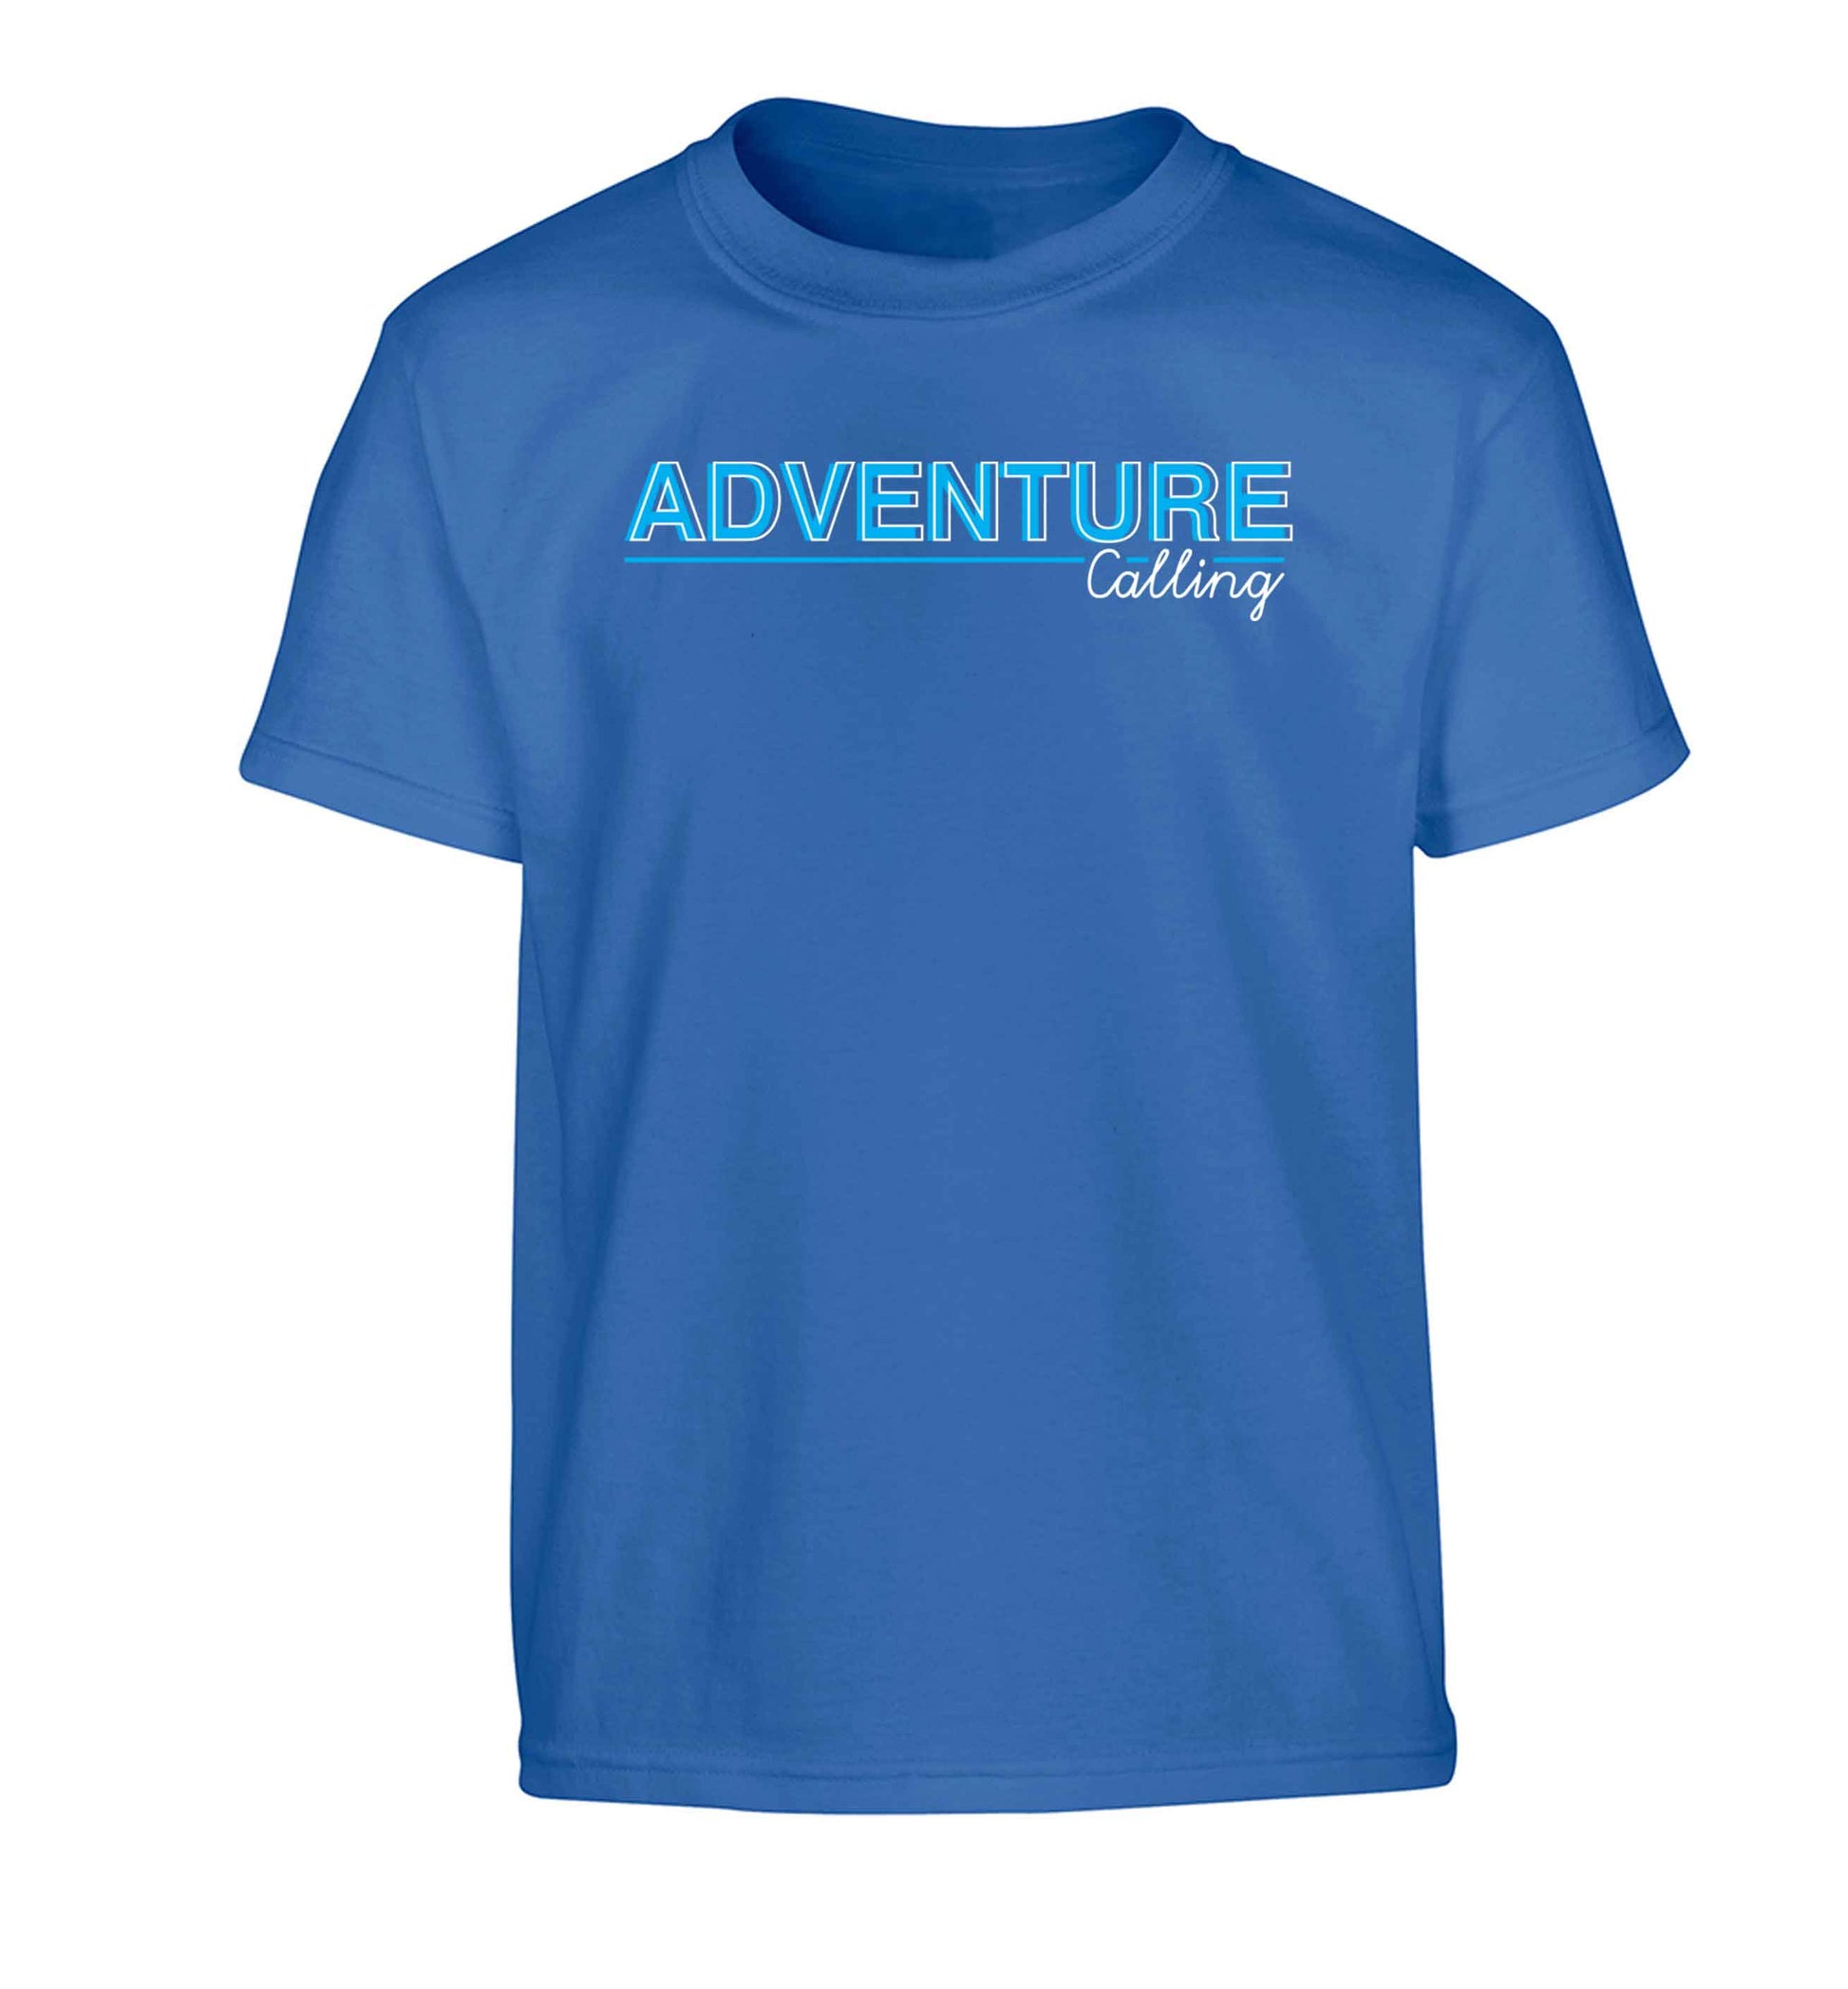 Adventure calling Children's blue Tshirt 12-13 Years